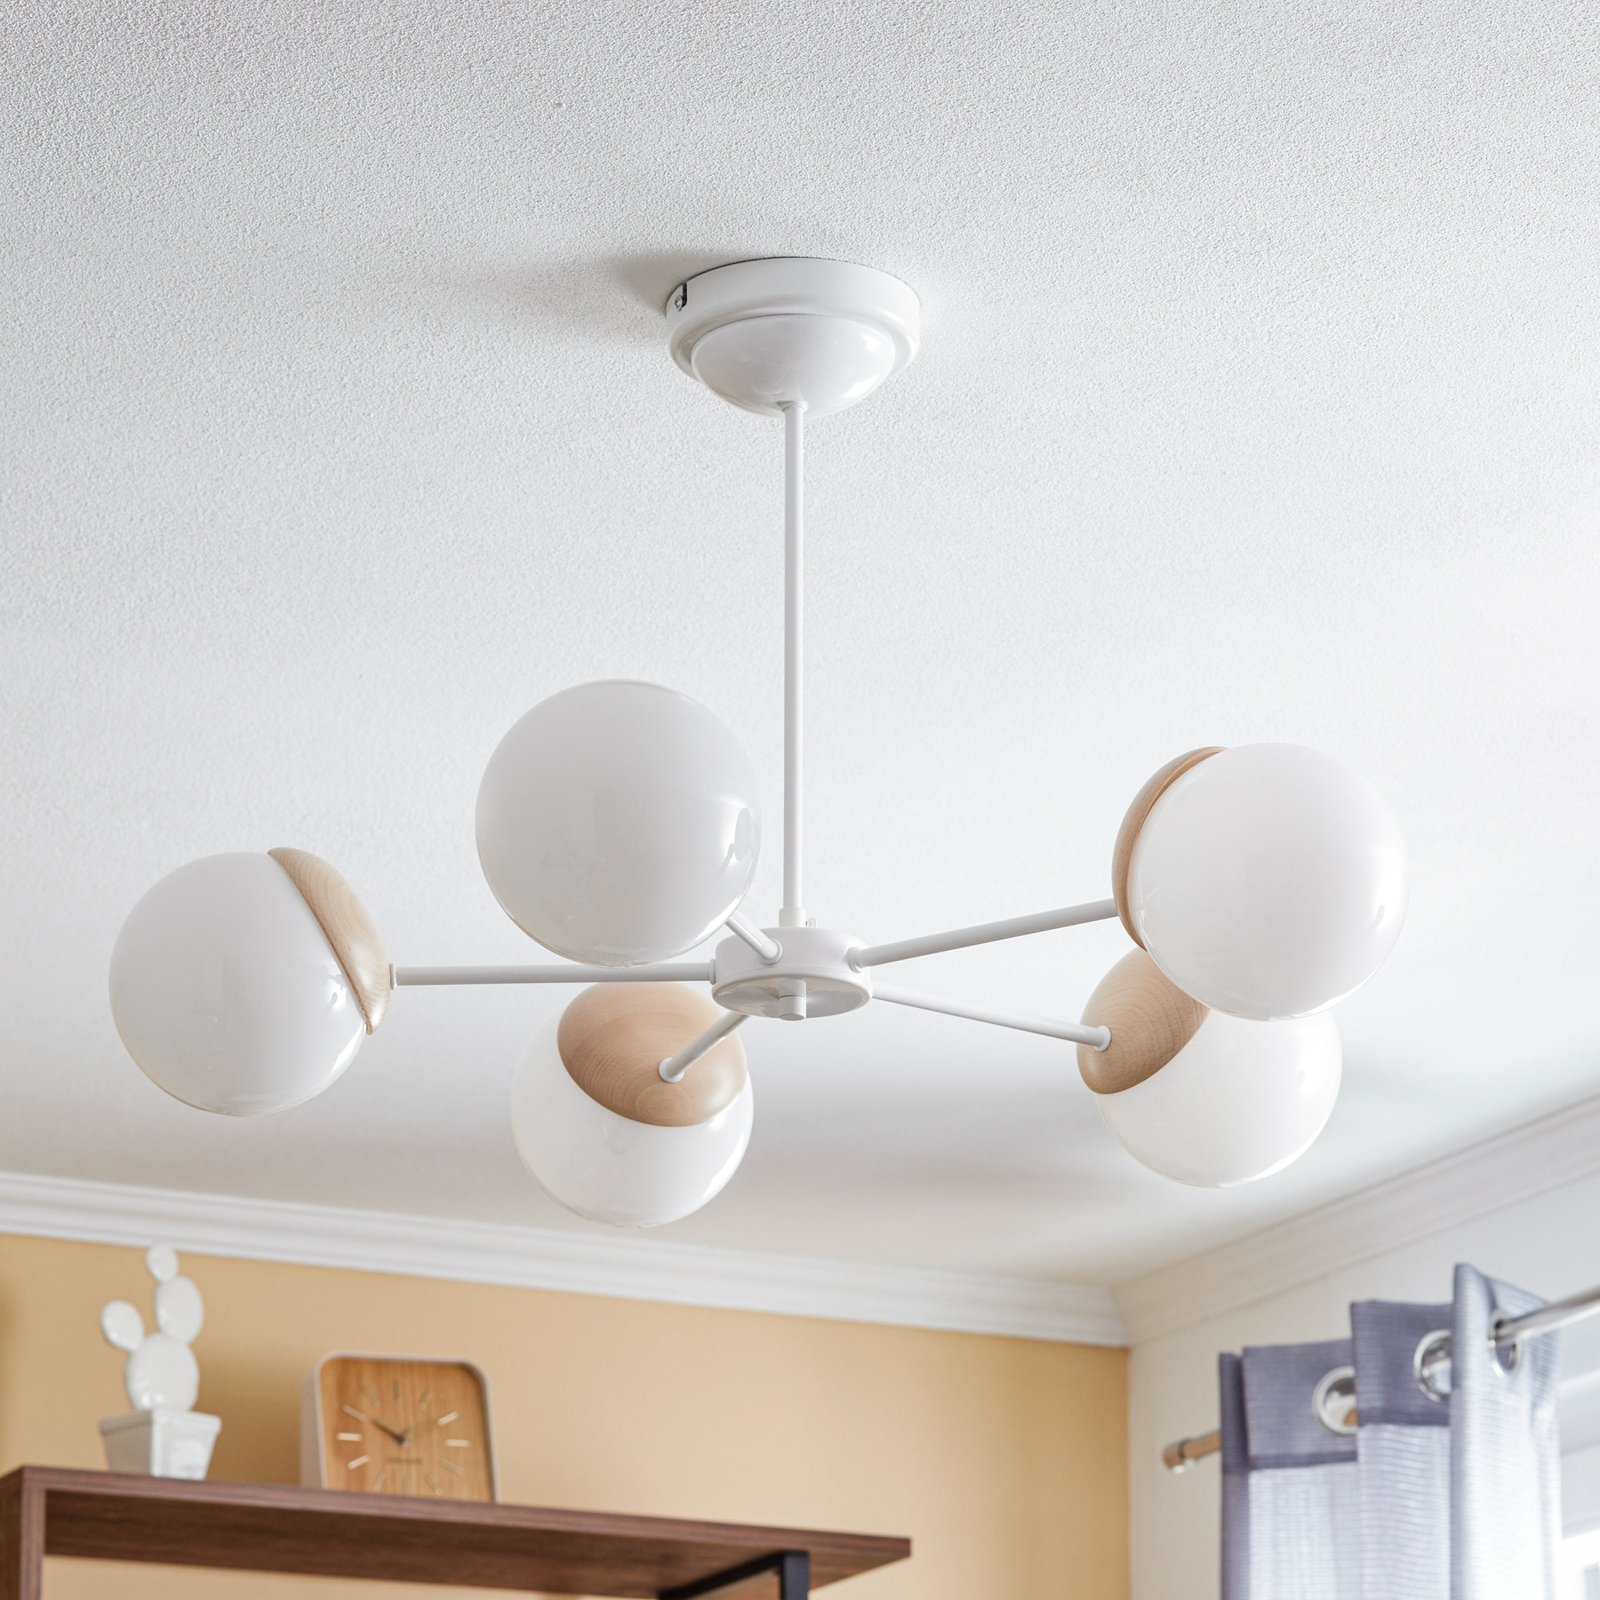 Sfera ceiling light 5-bulb semi-flush glass/wood